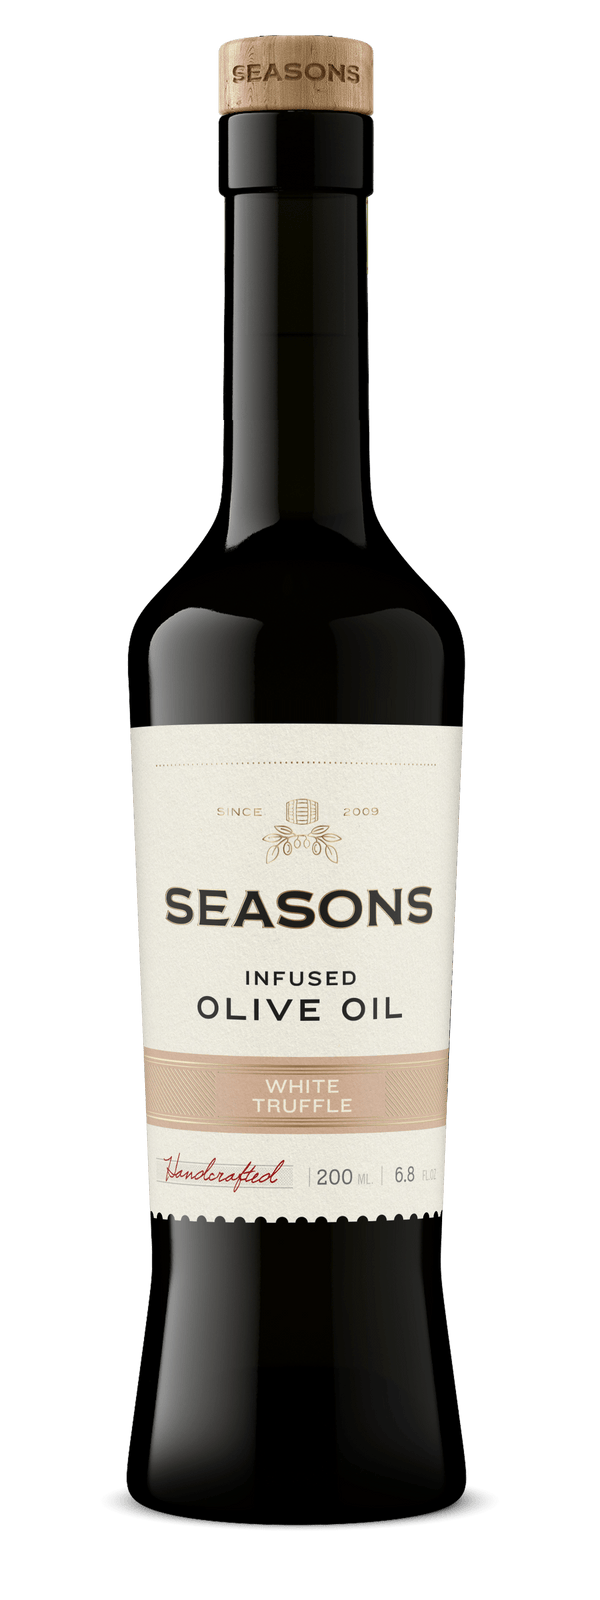 Seasons Infused Olive Oil 200mL White Truffle